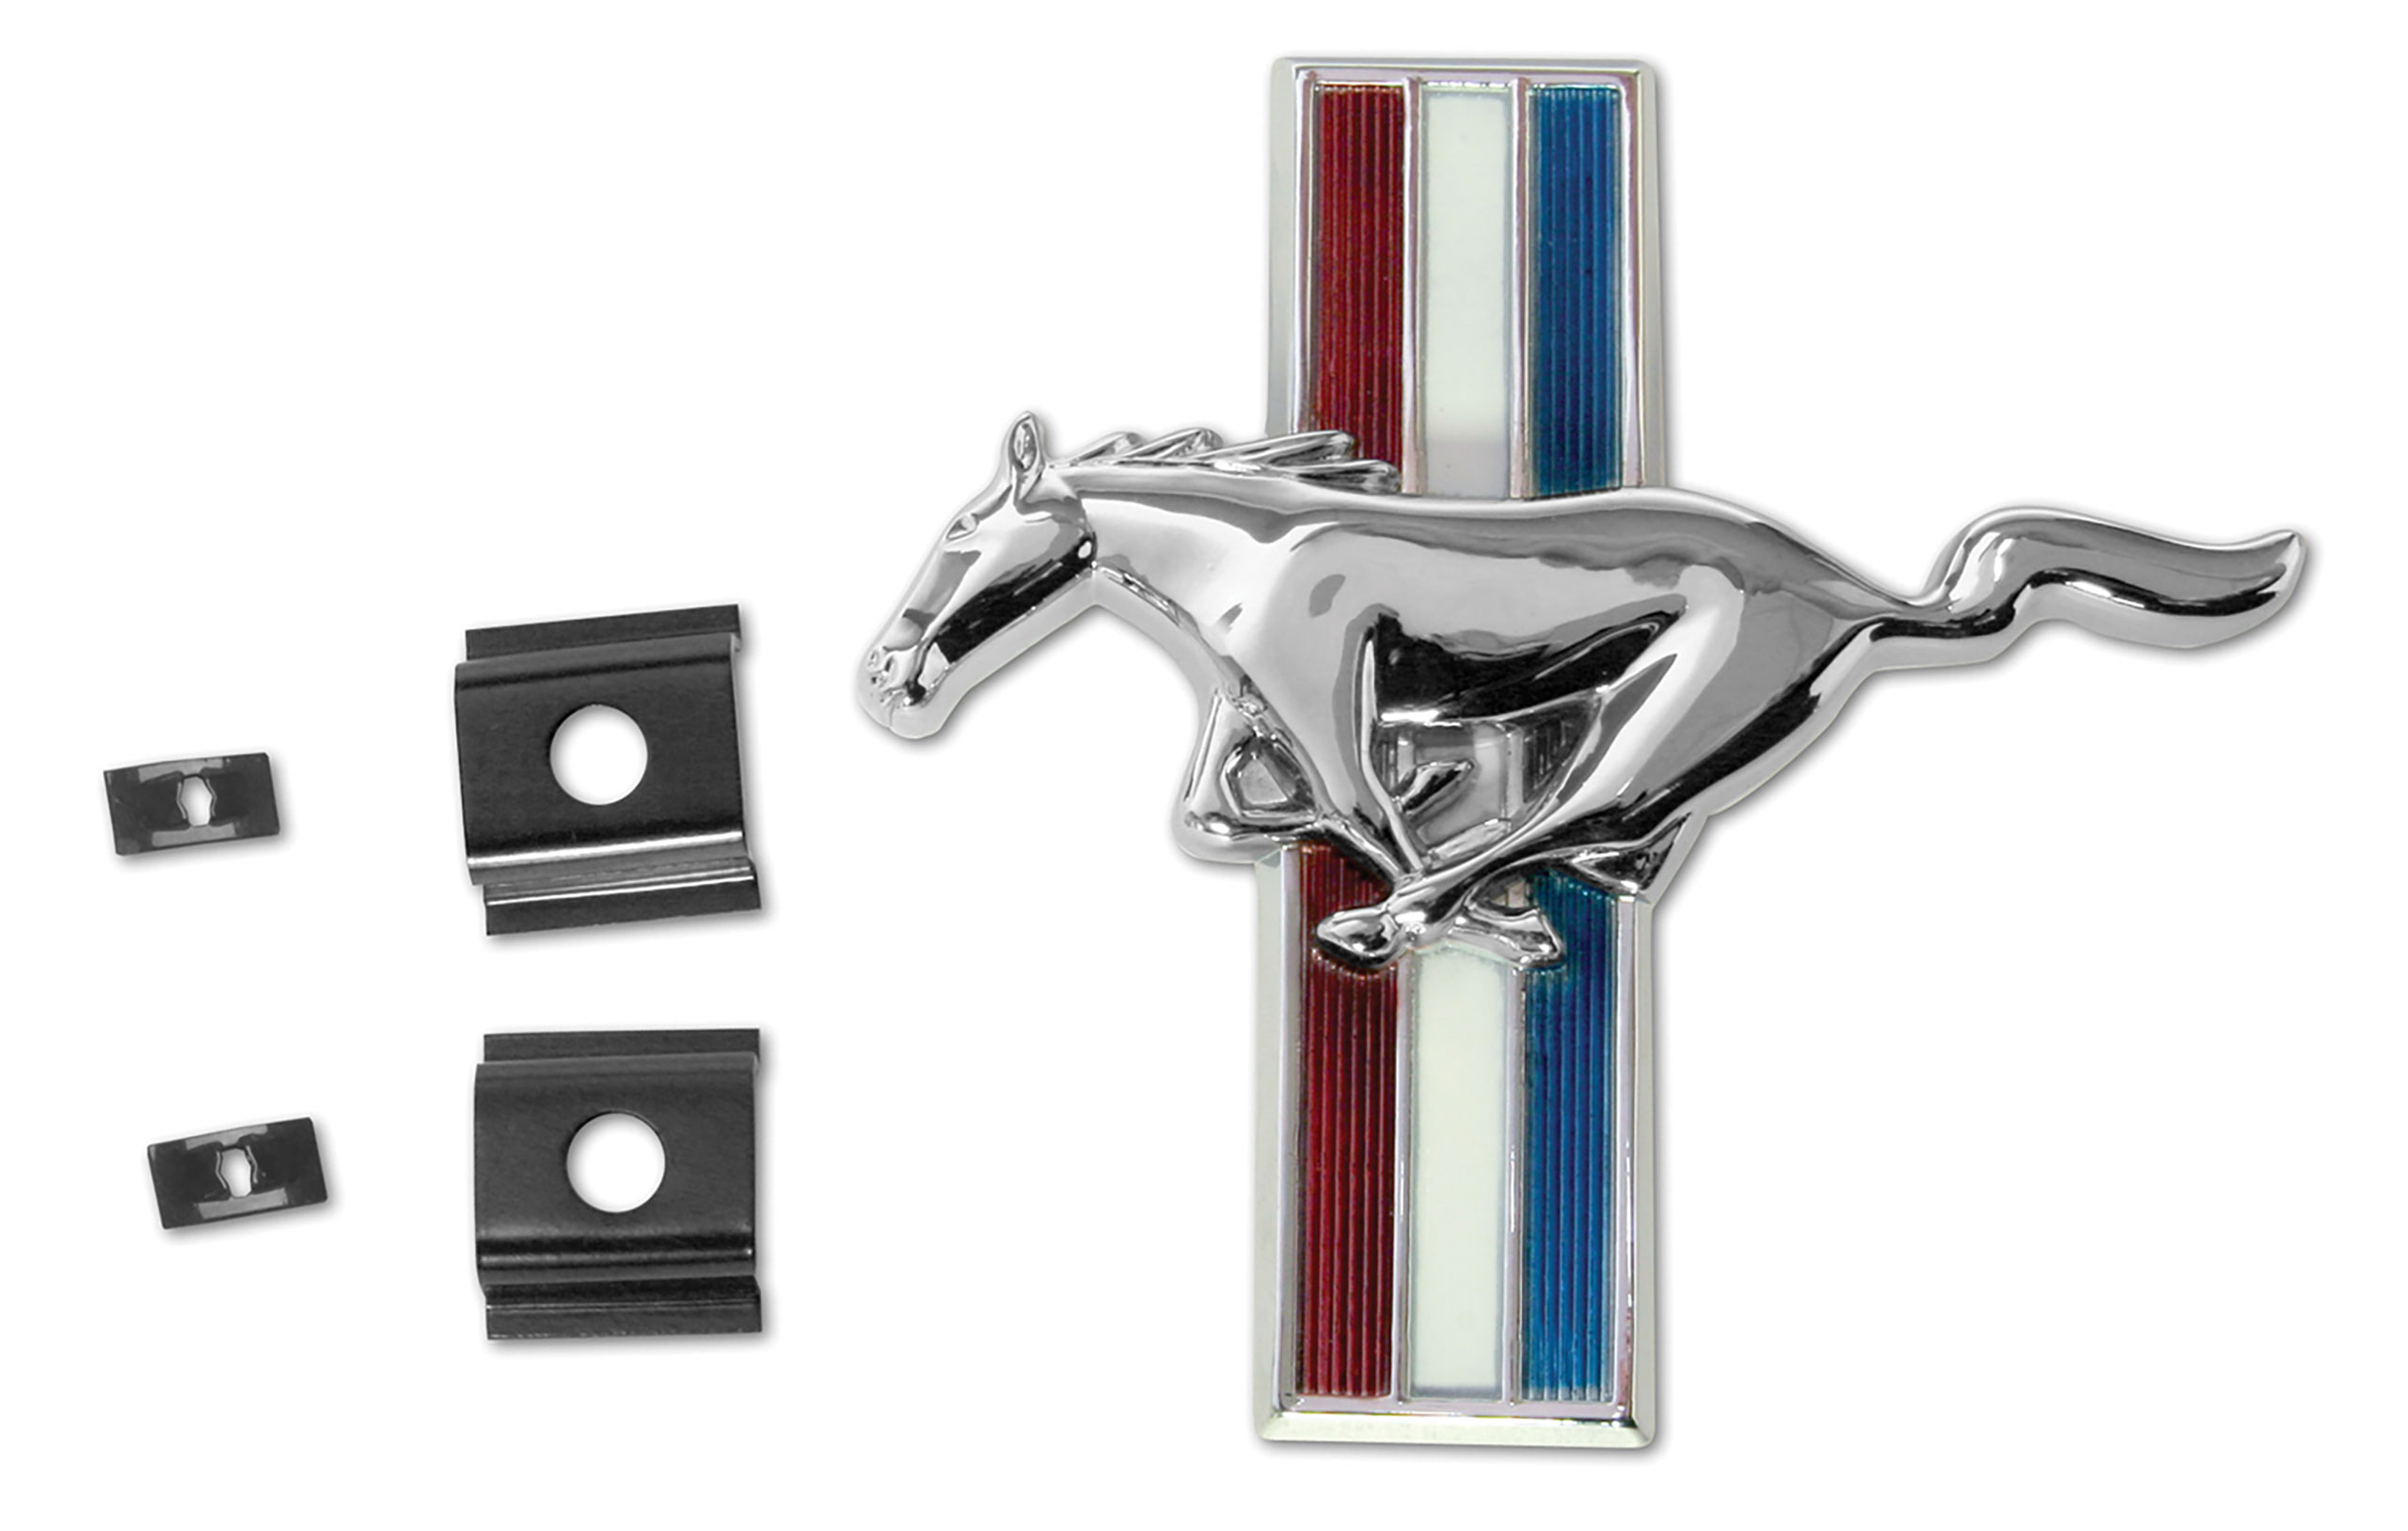 First Generation 1966 Ford Mustang Running Horse Grille Emblem - Scott Drake